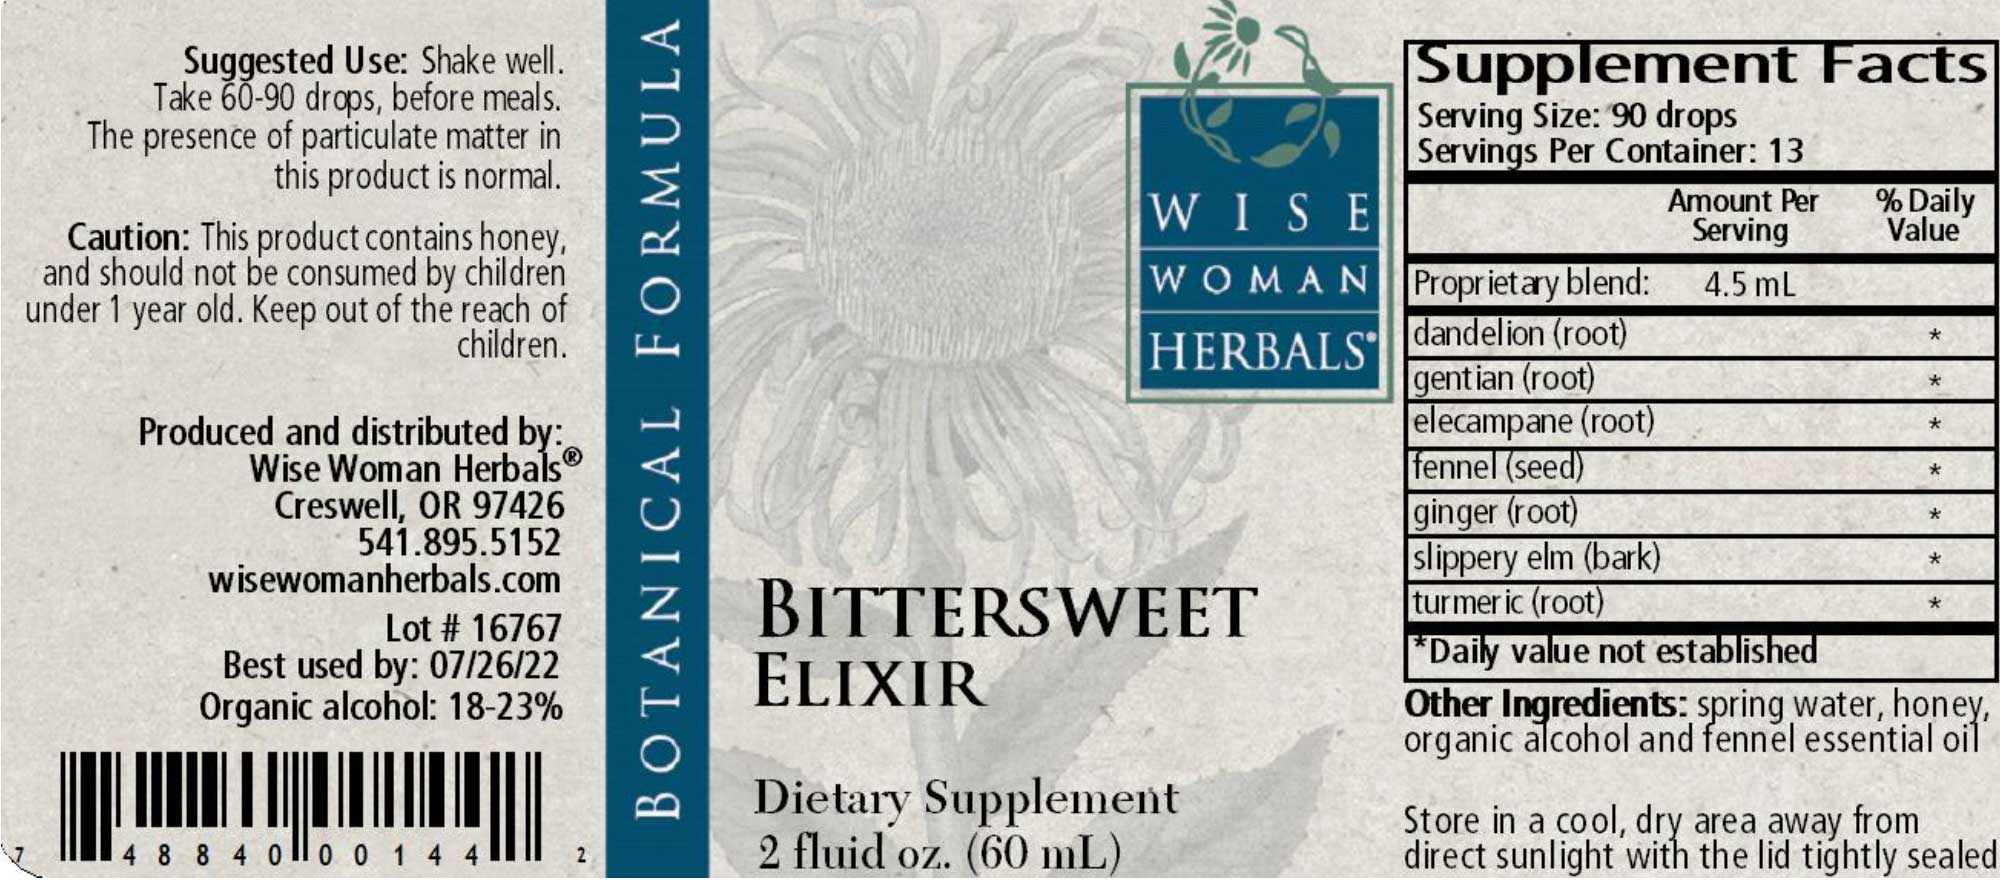 Wise Woman Herbals Bittersweet Elixir Label